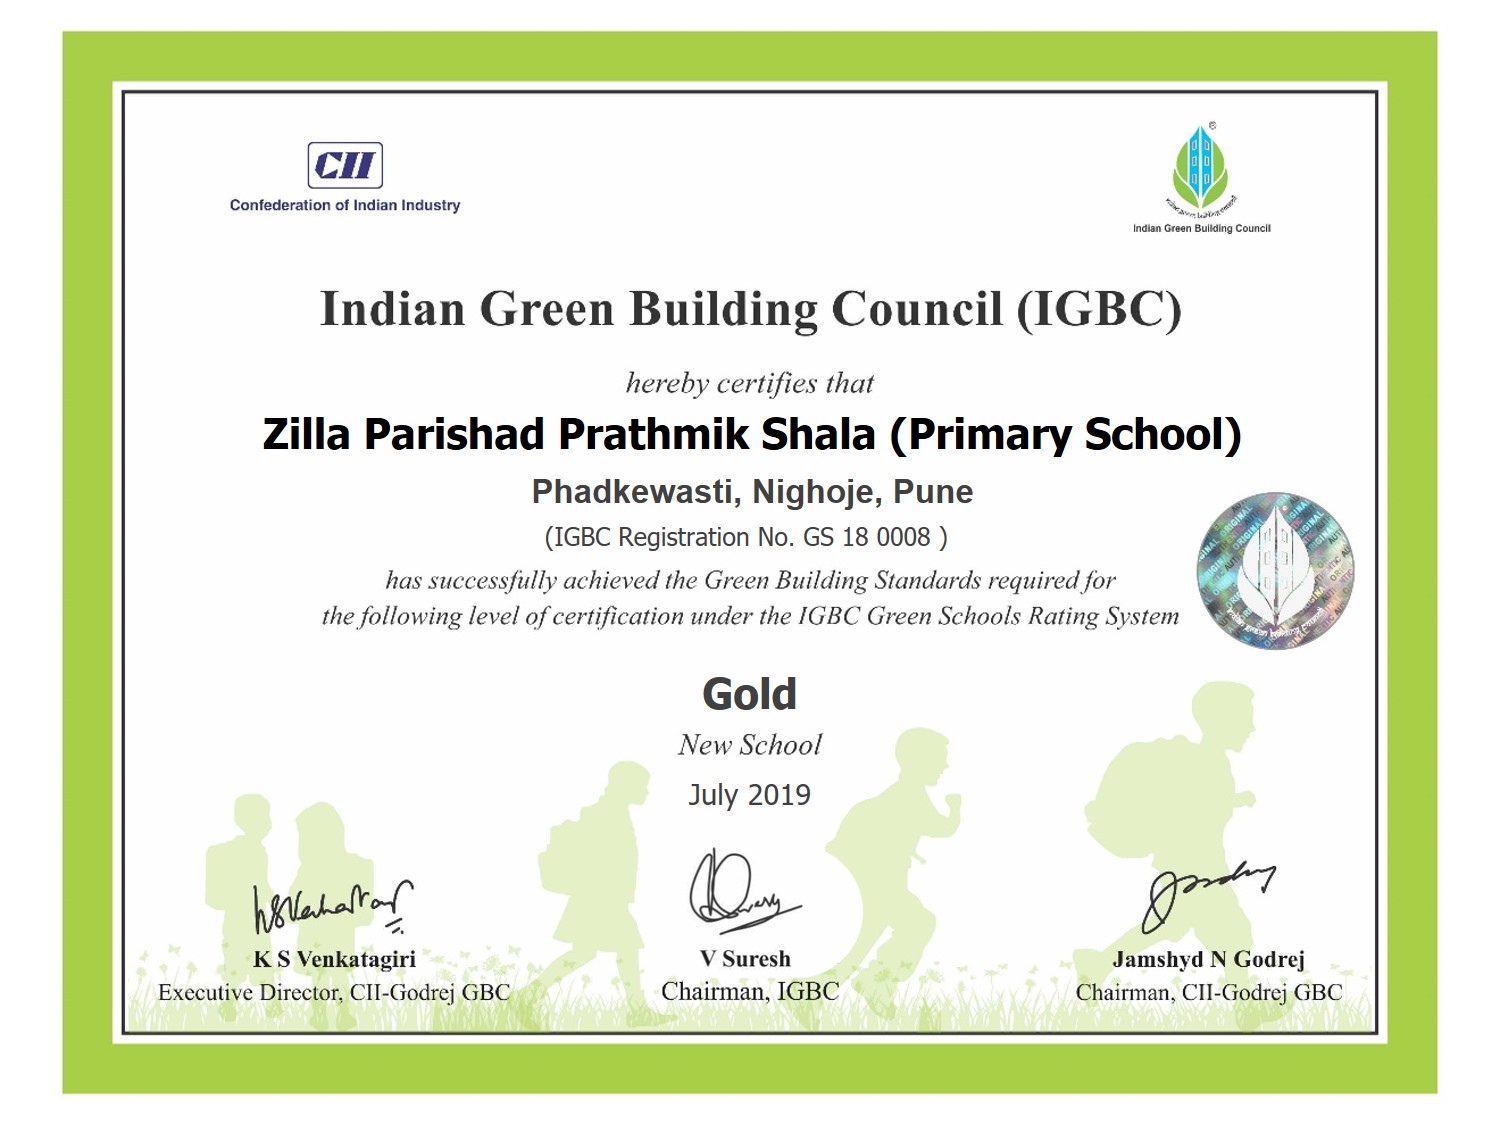 Zilla Parishad Primary School constructed by Volkswagen India receives Gold certification decoding=